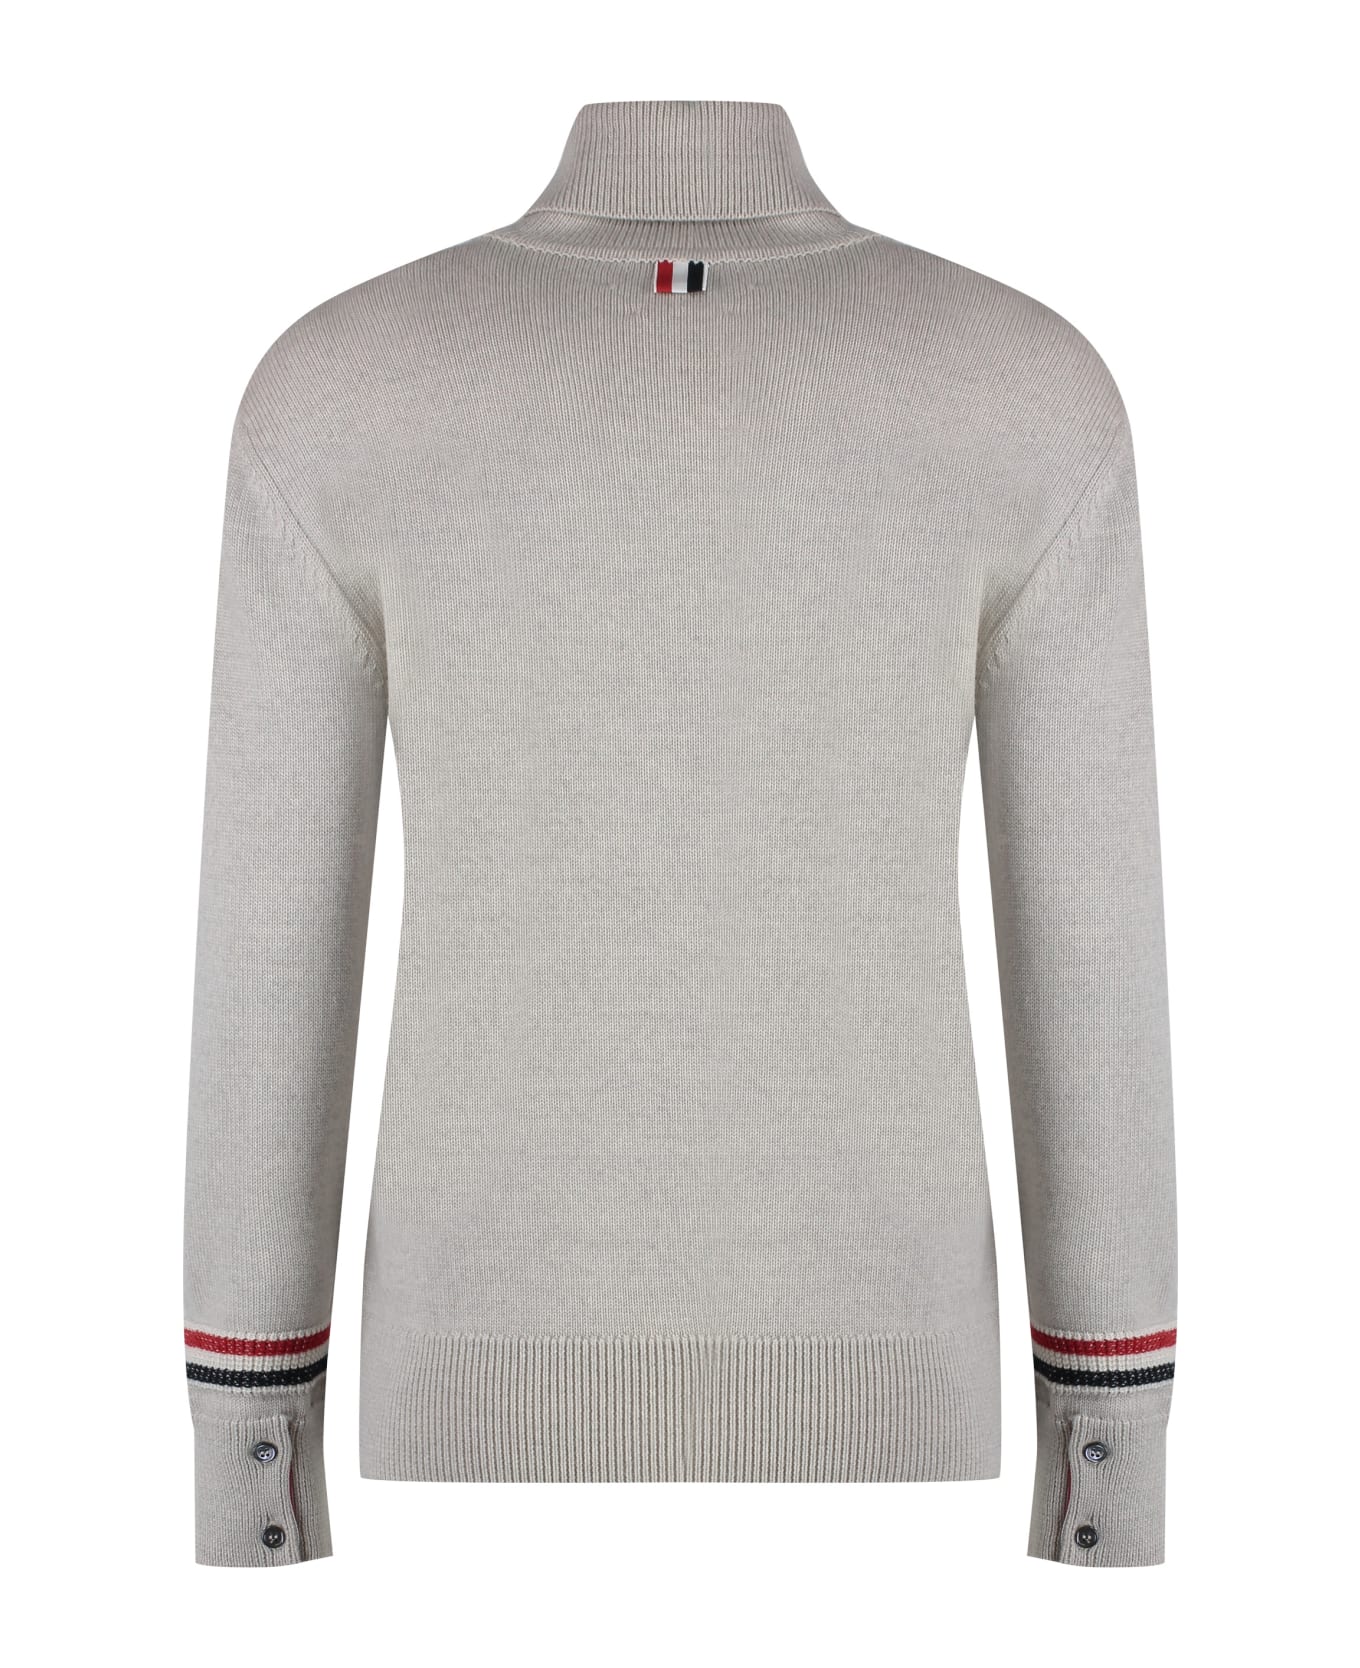 Thom Browne Wool Turtleneck Sweater - grey